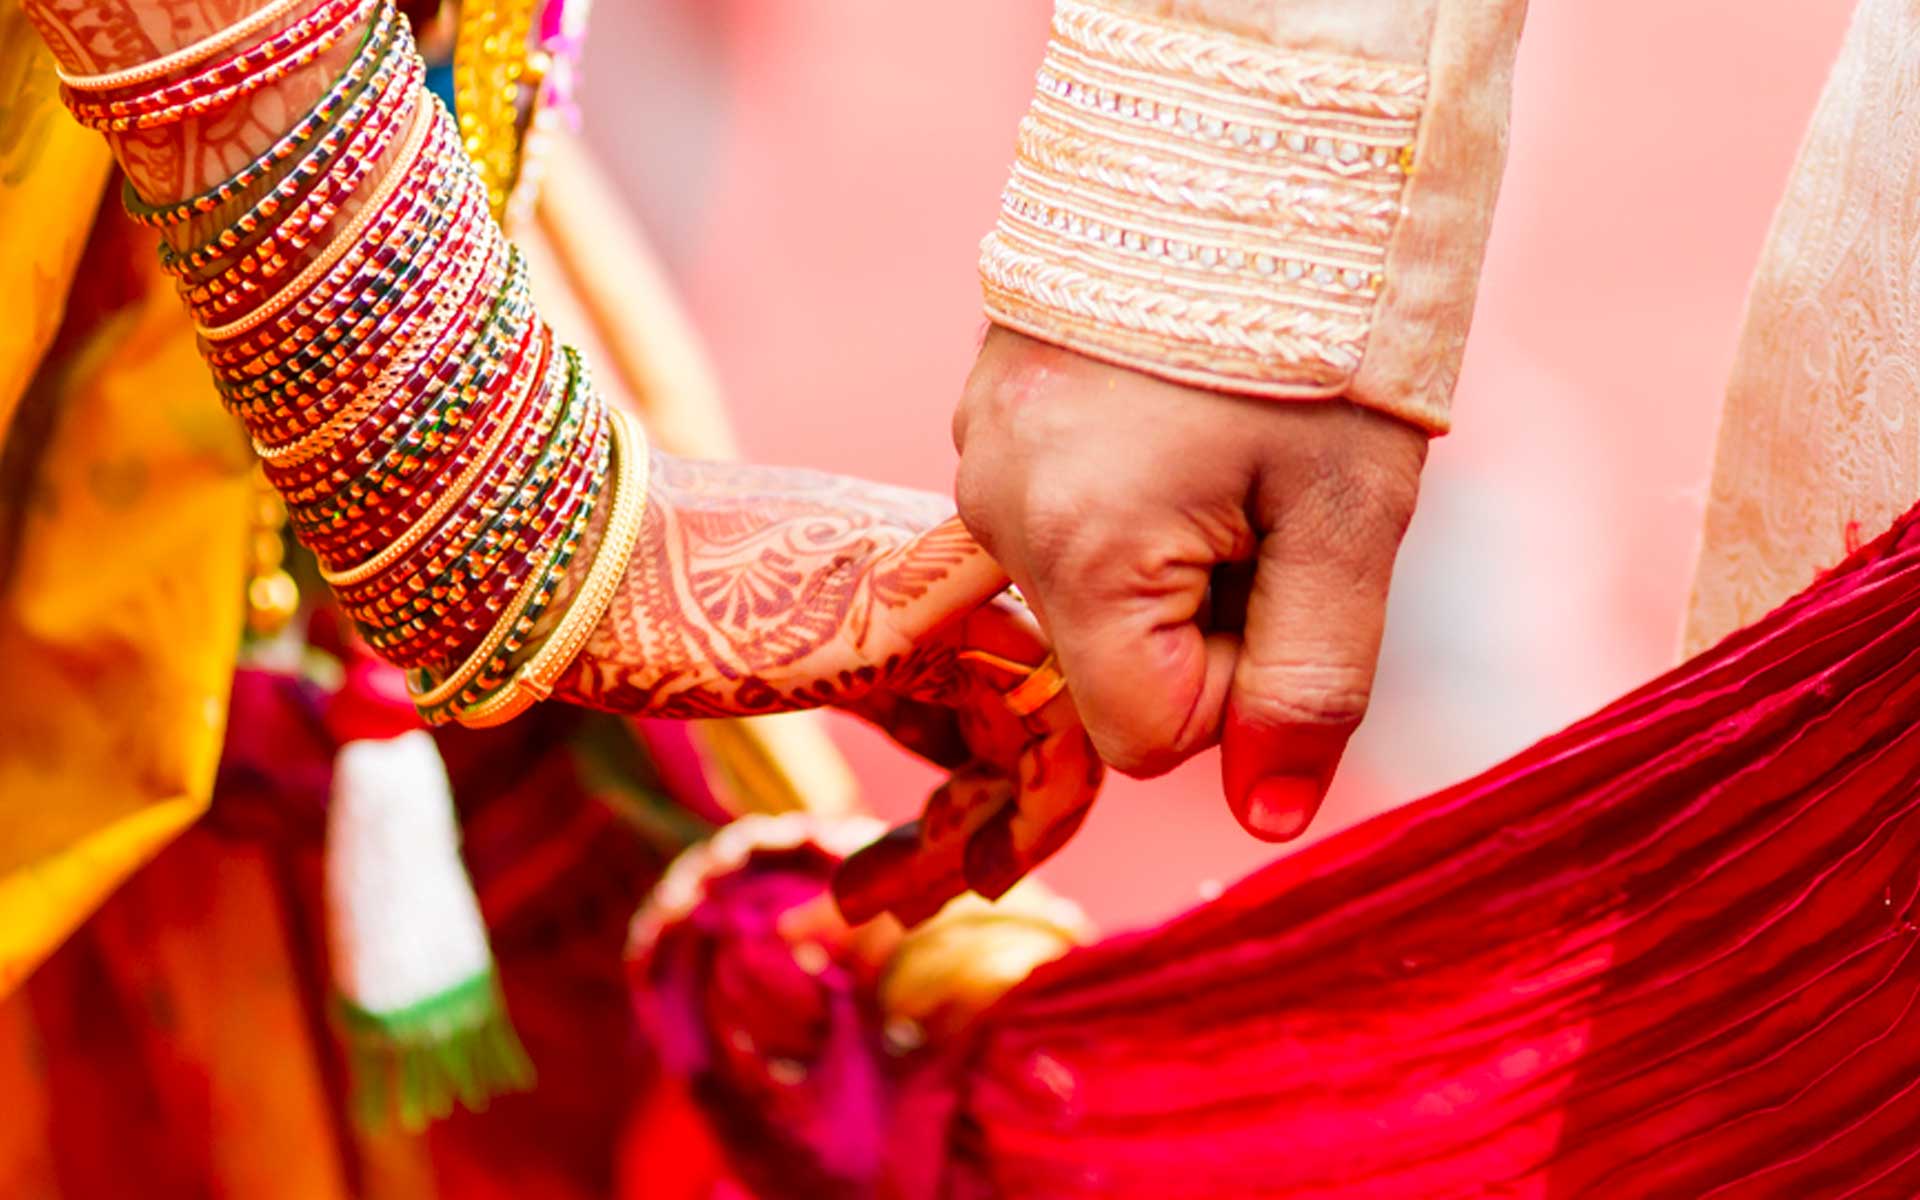 Marriage Services in Delhi/NCR